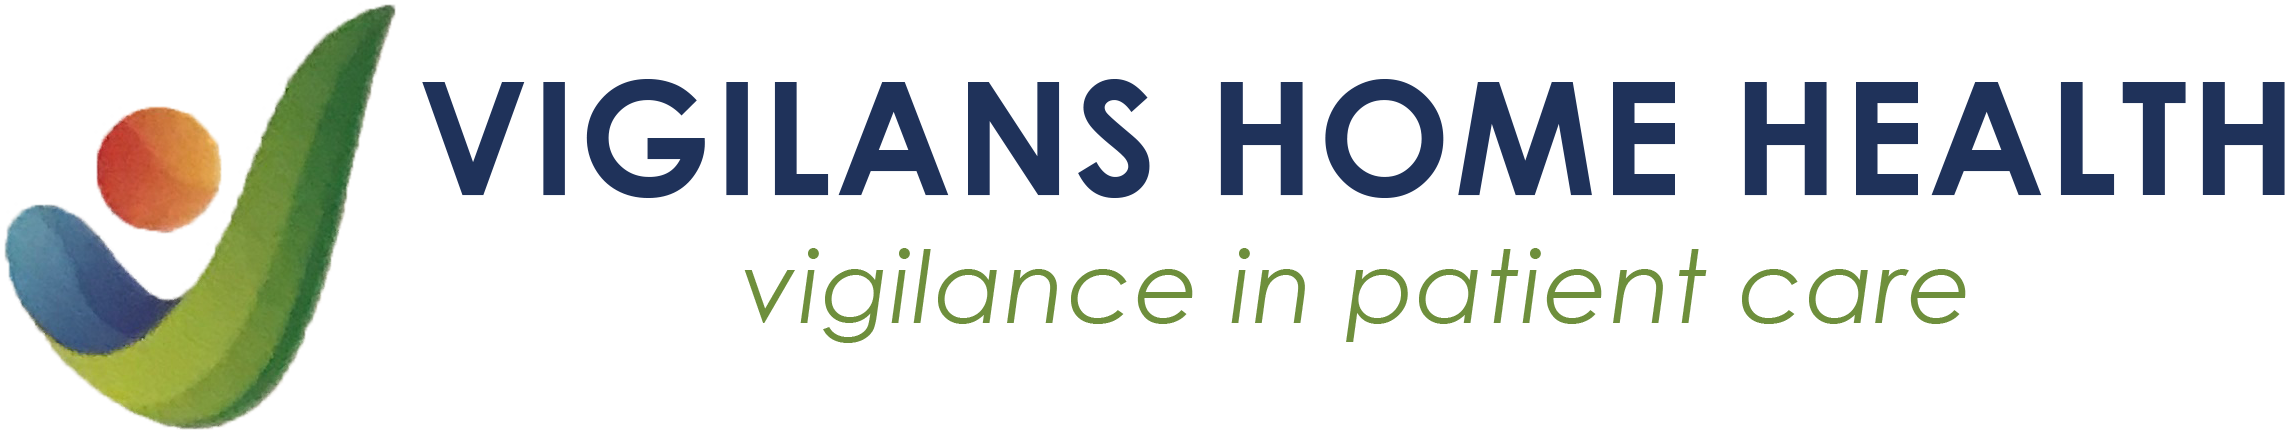 Vigilans Home Health | Home Health Care in Redlands, CA